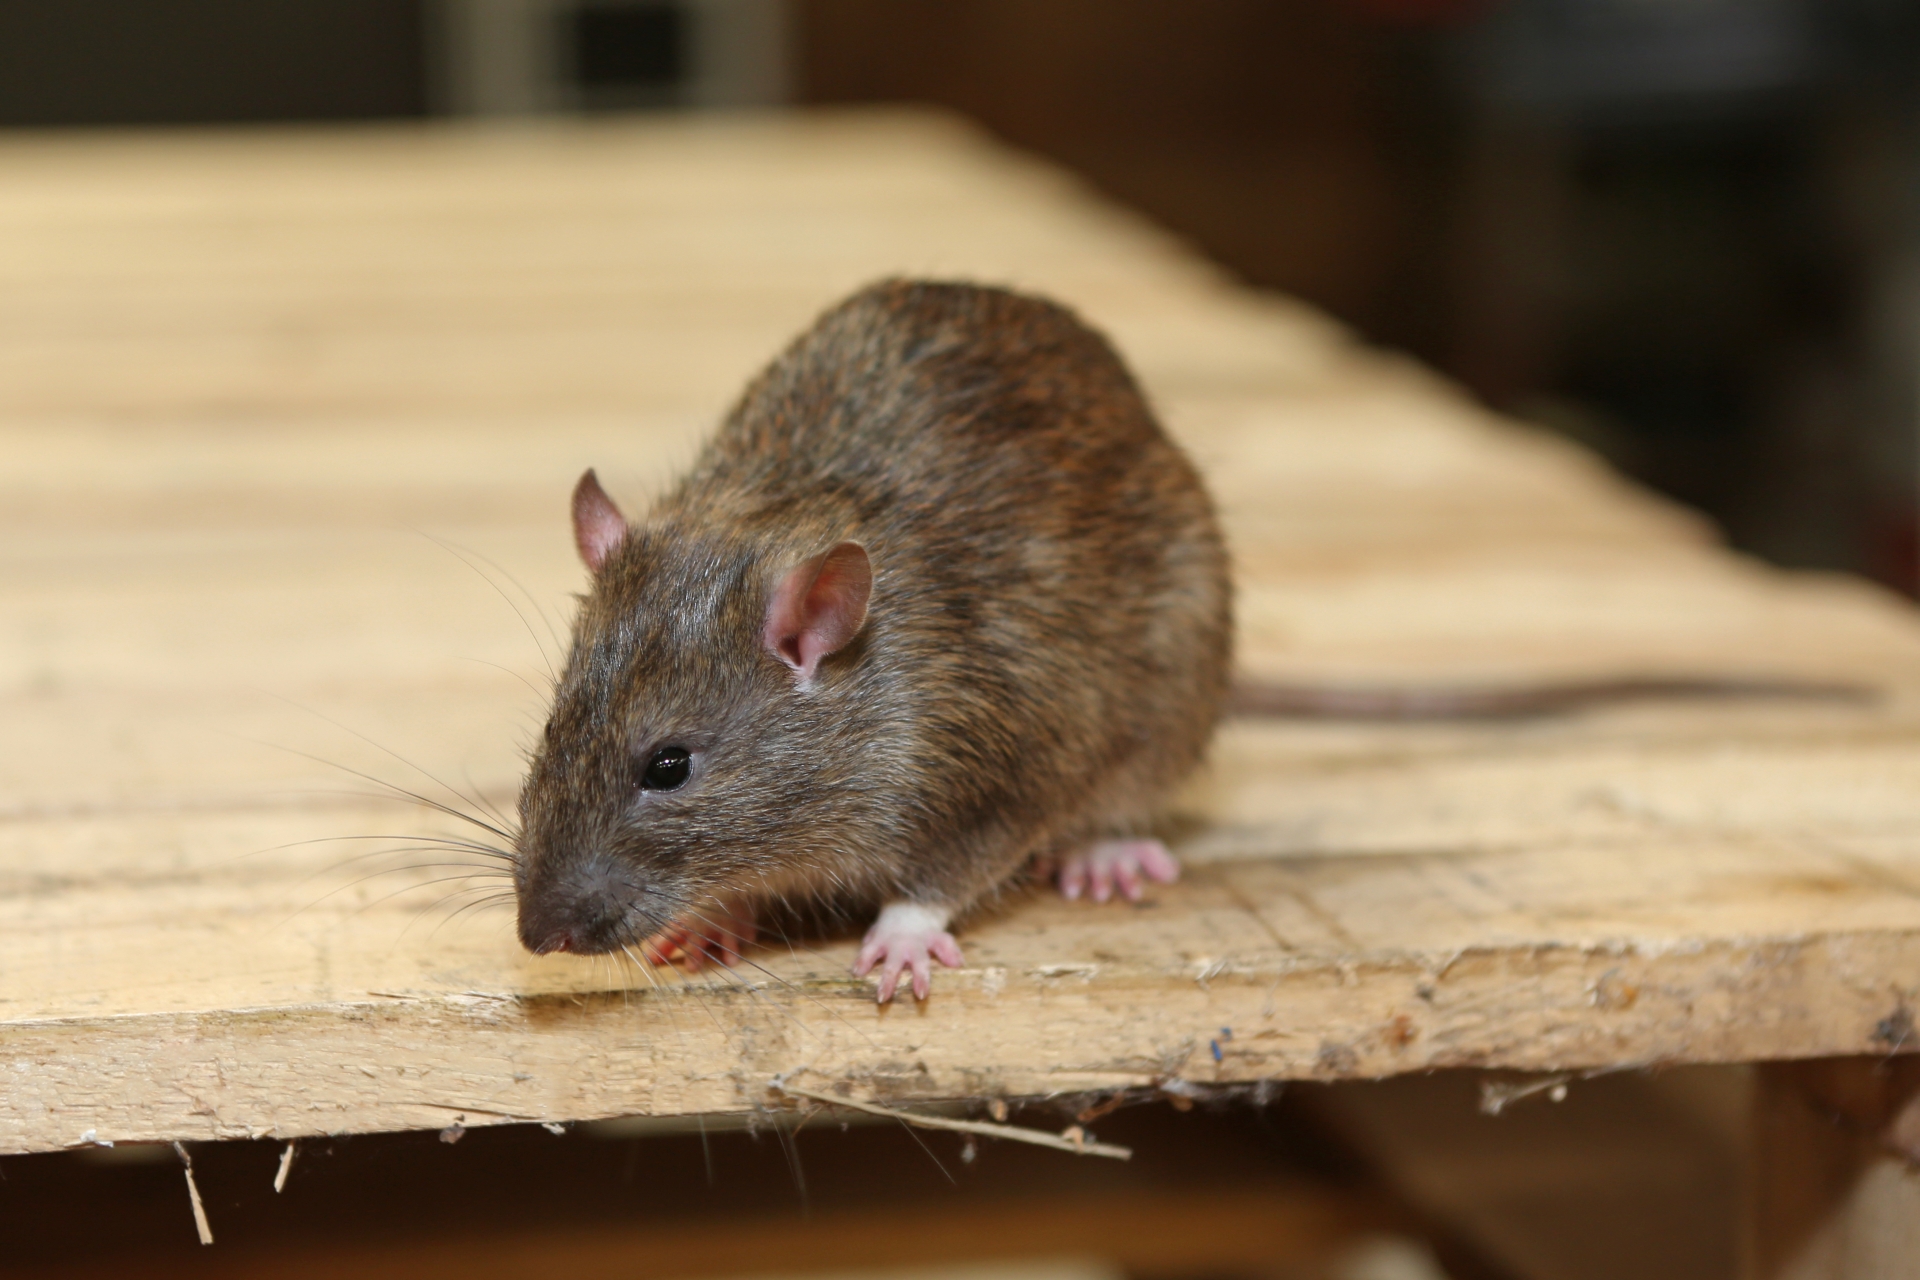 Rat extermination, Pest Control in North Harrow, South Harrow, West Harrow, HA2. Call Now 020 8166 9746